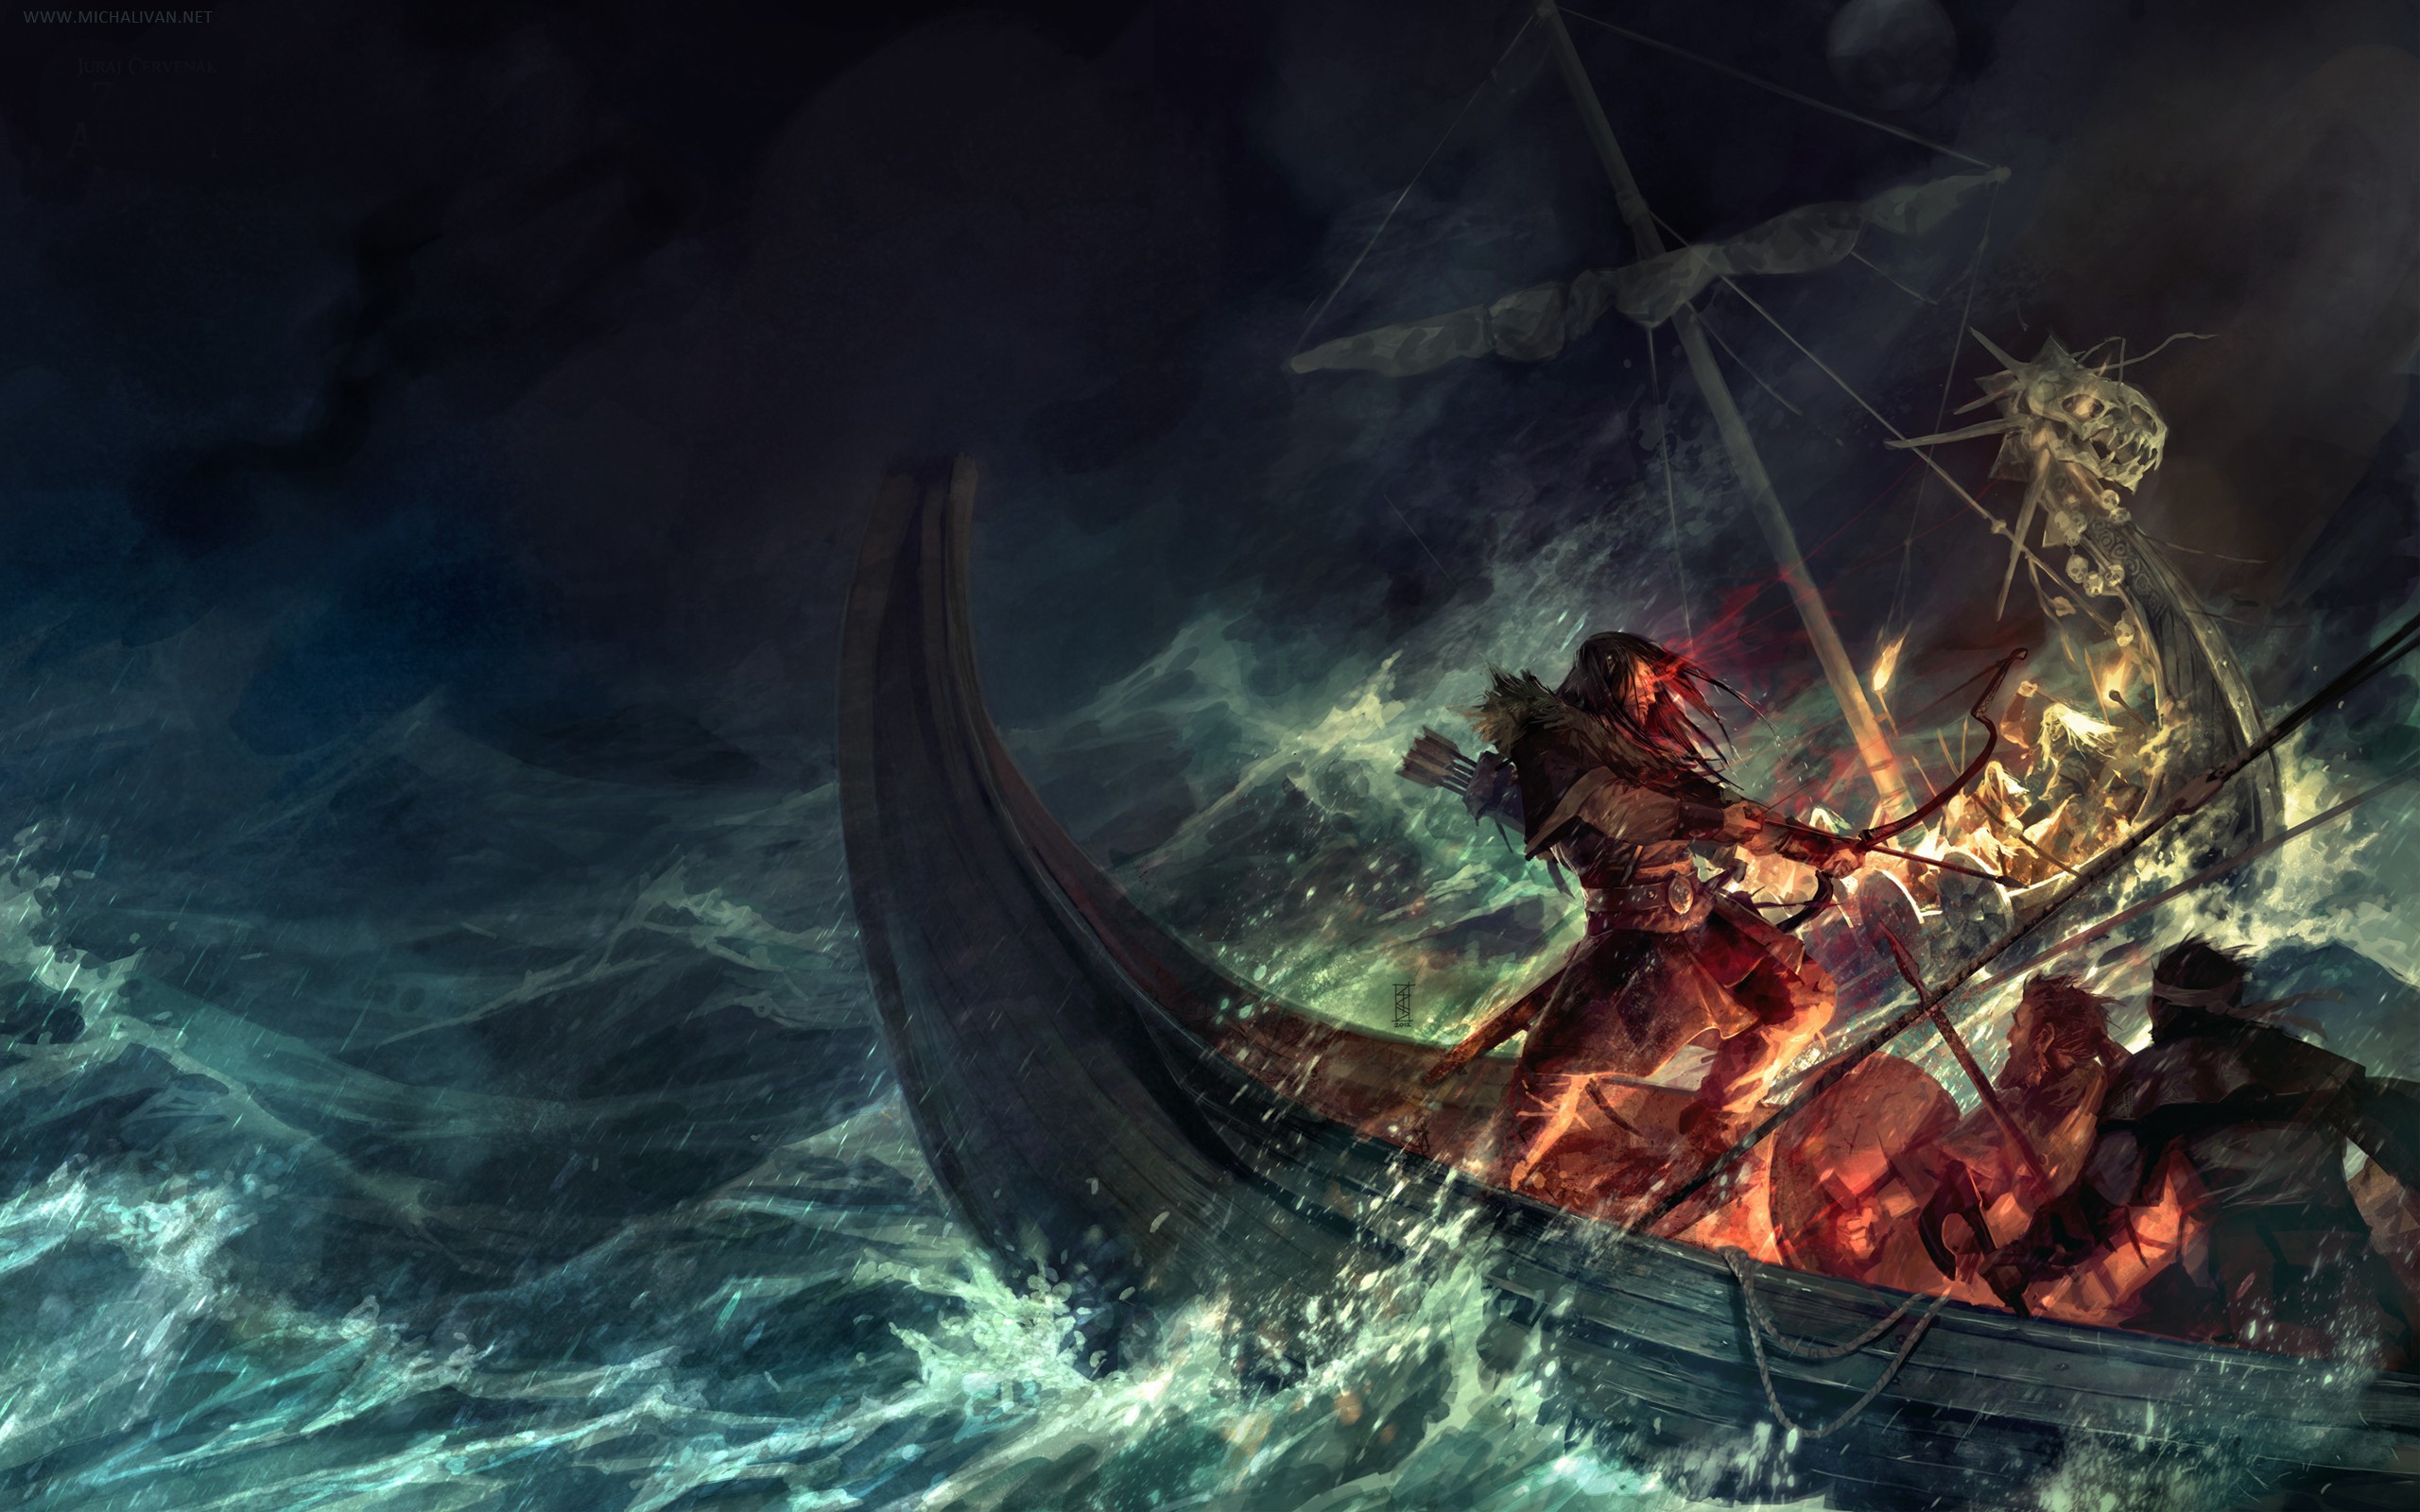 General 2560x1600 fantasy art Vikings boat storm sea vehicle digital art waves water night bow and arrow